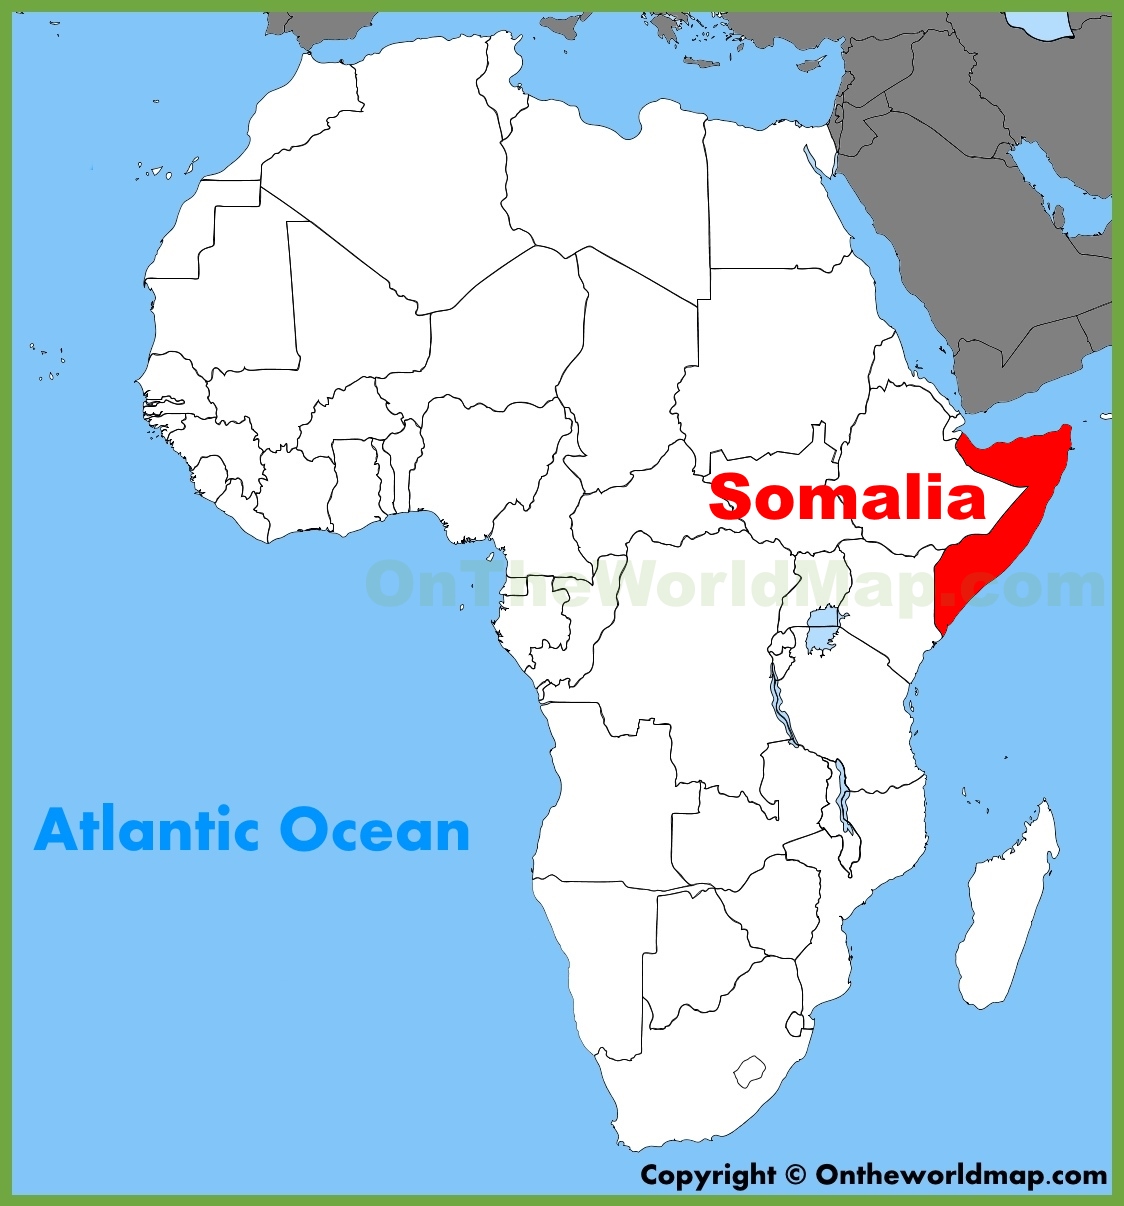 somalia-location-on-the-africa-map.jpg